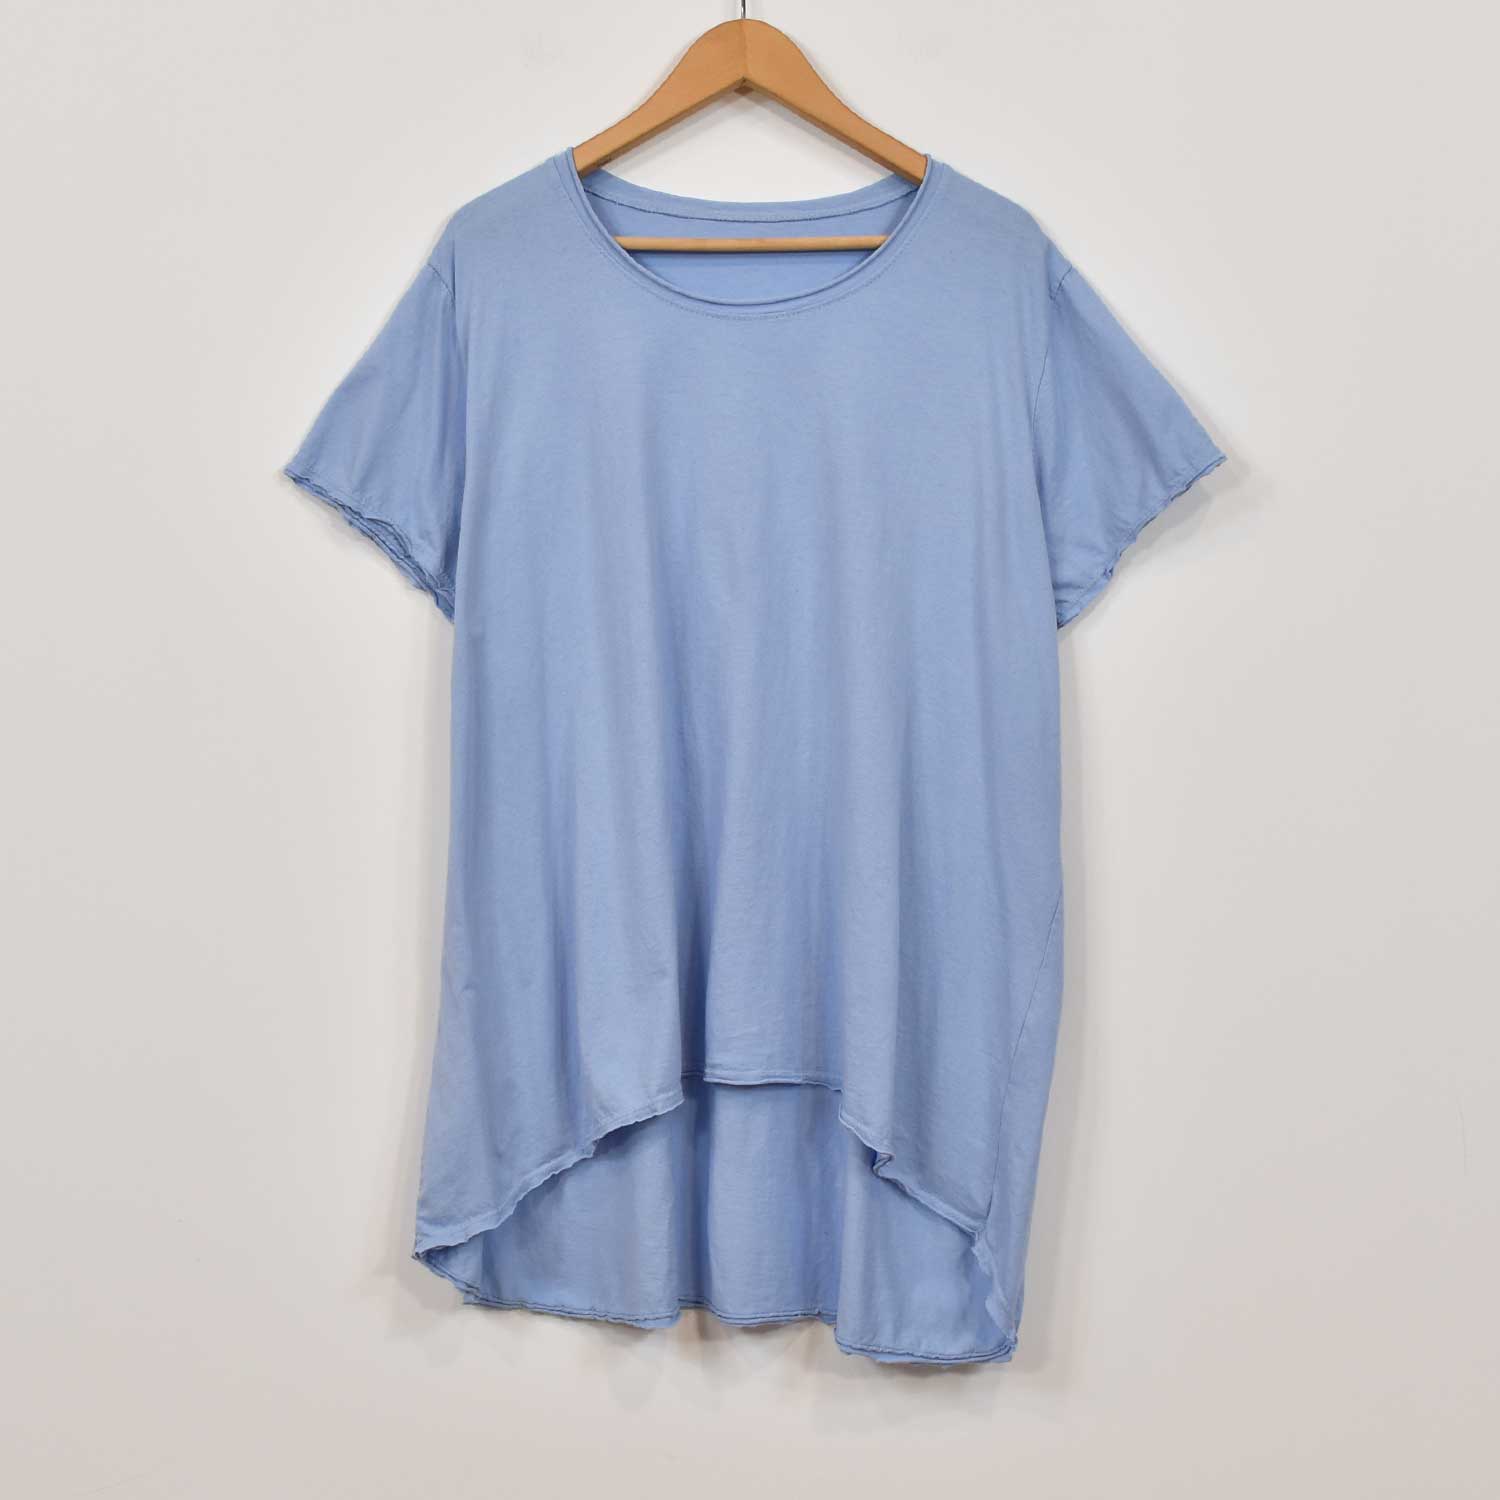 Camiseta asimétrica manga corta  azul